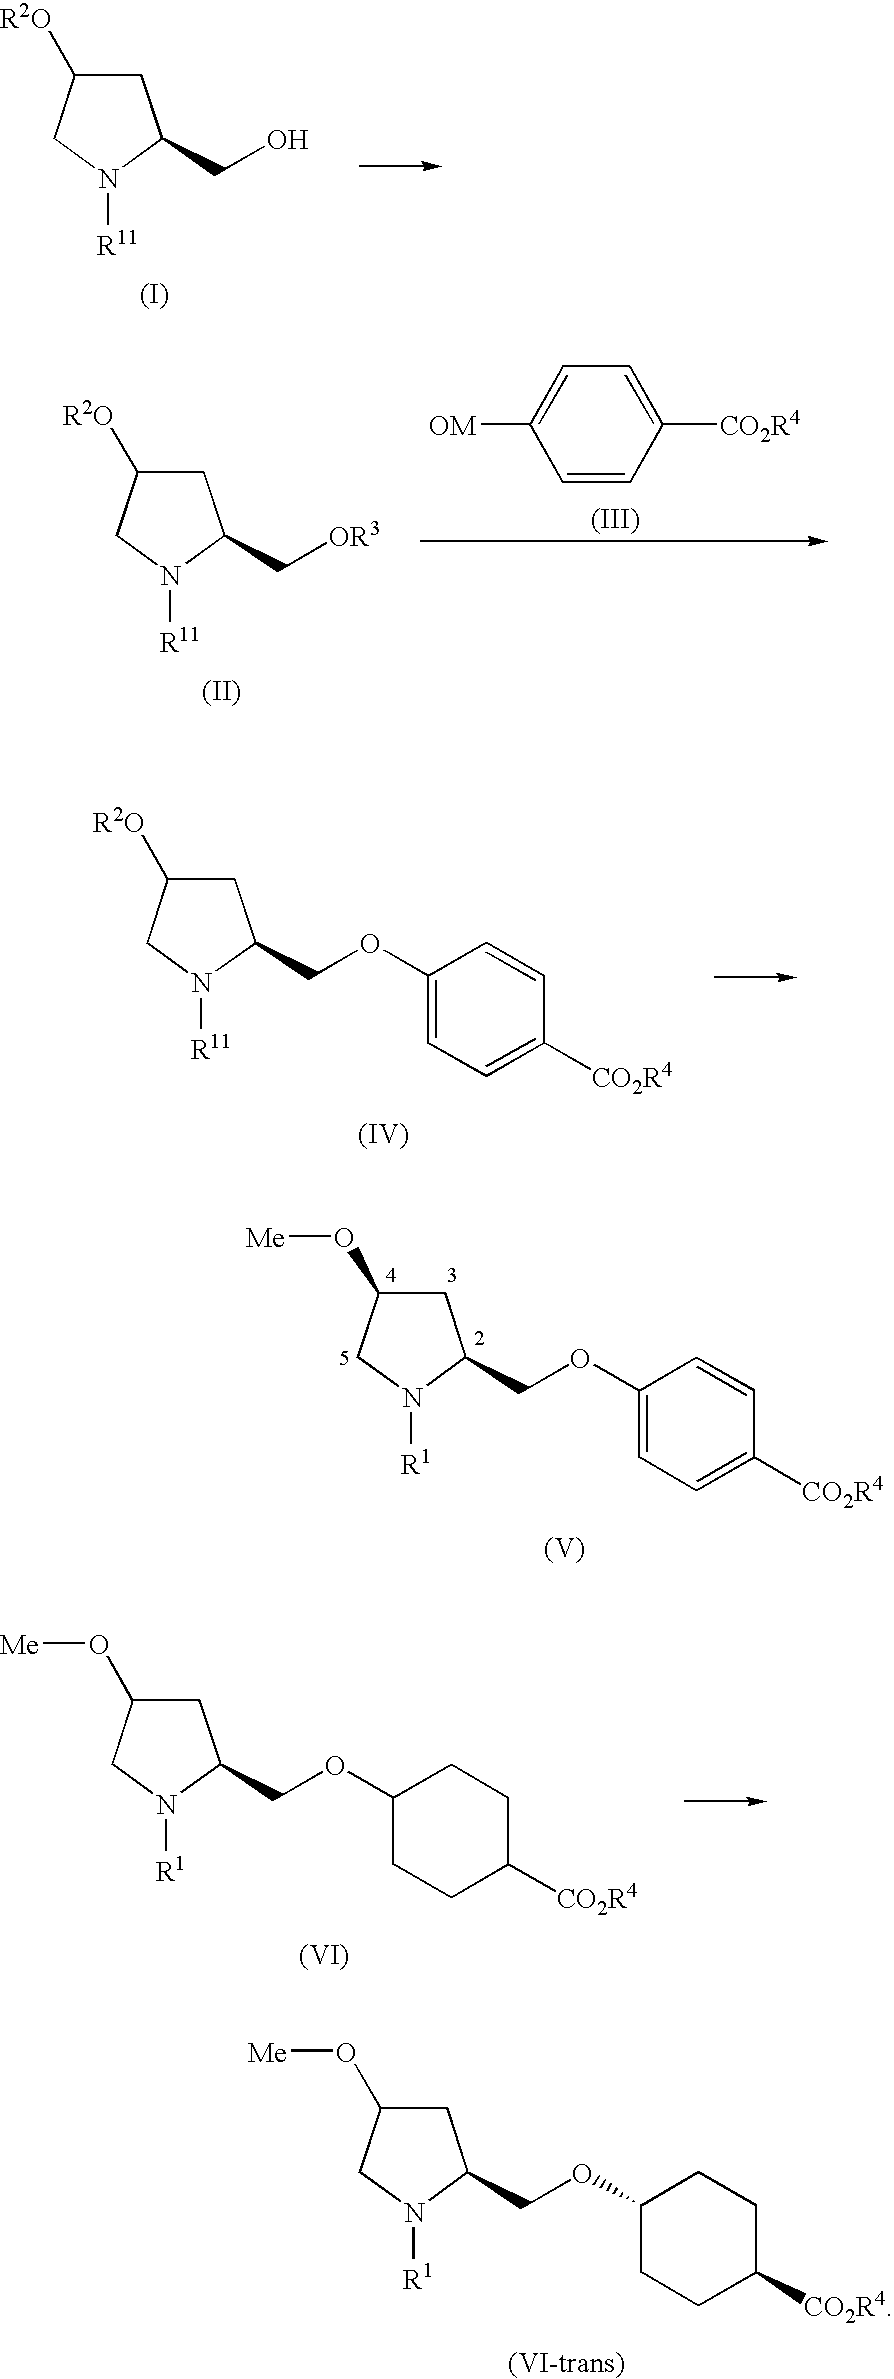 Process for producing pyrrolidine derivative